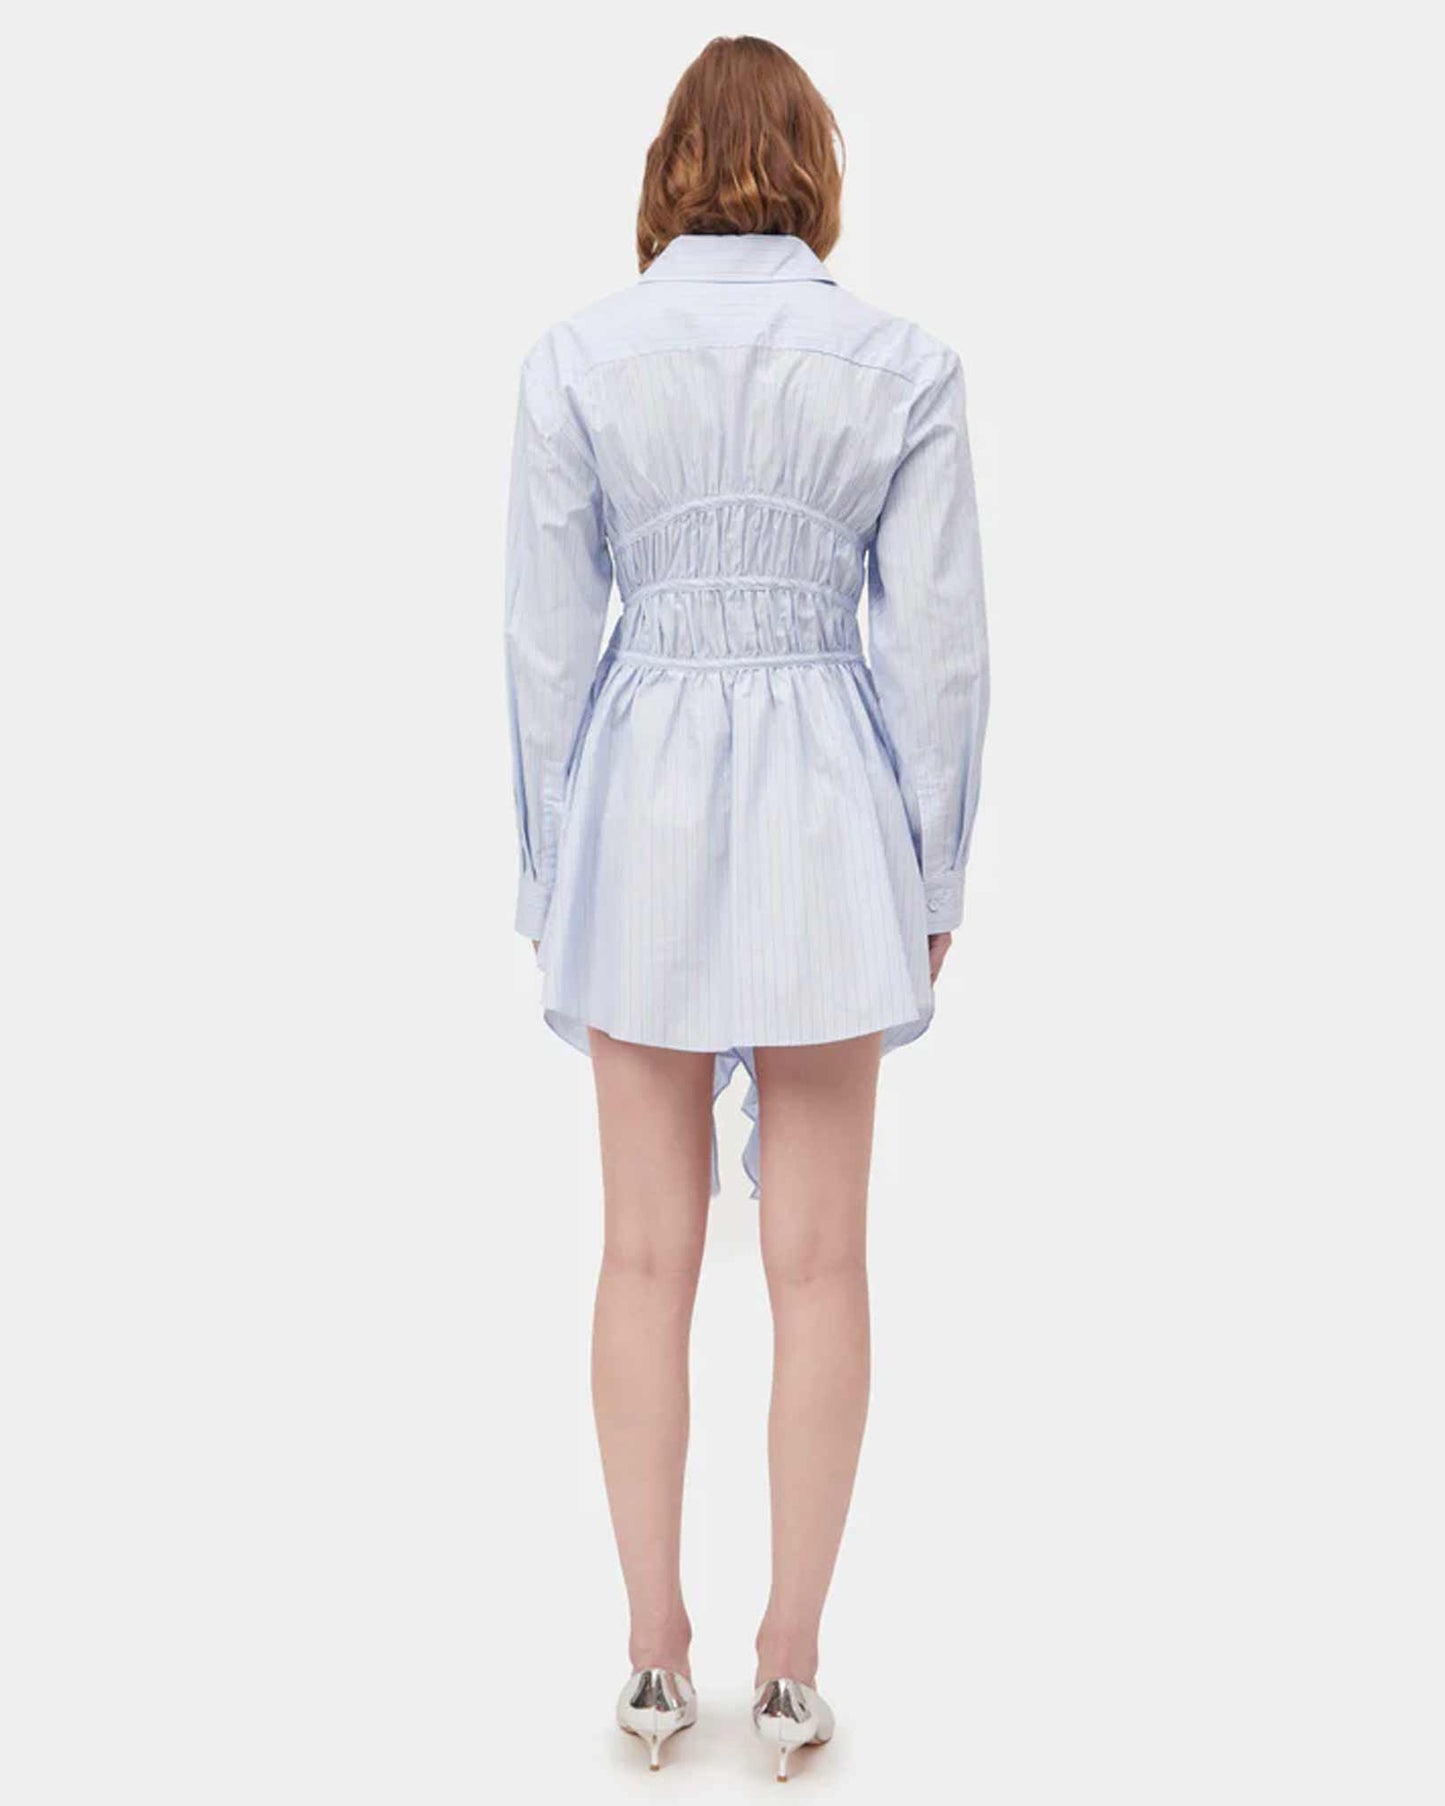 AKNVAS Helene Shirt Dress in Blue Mini Stripe available at Lahn.shop